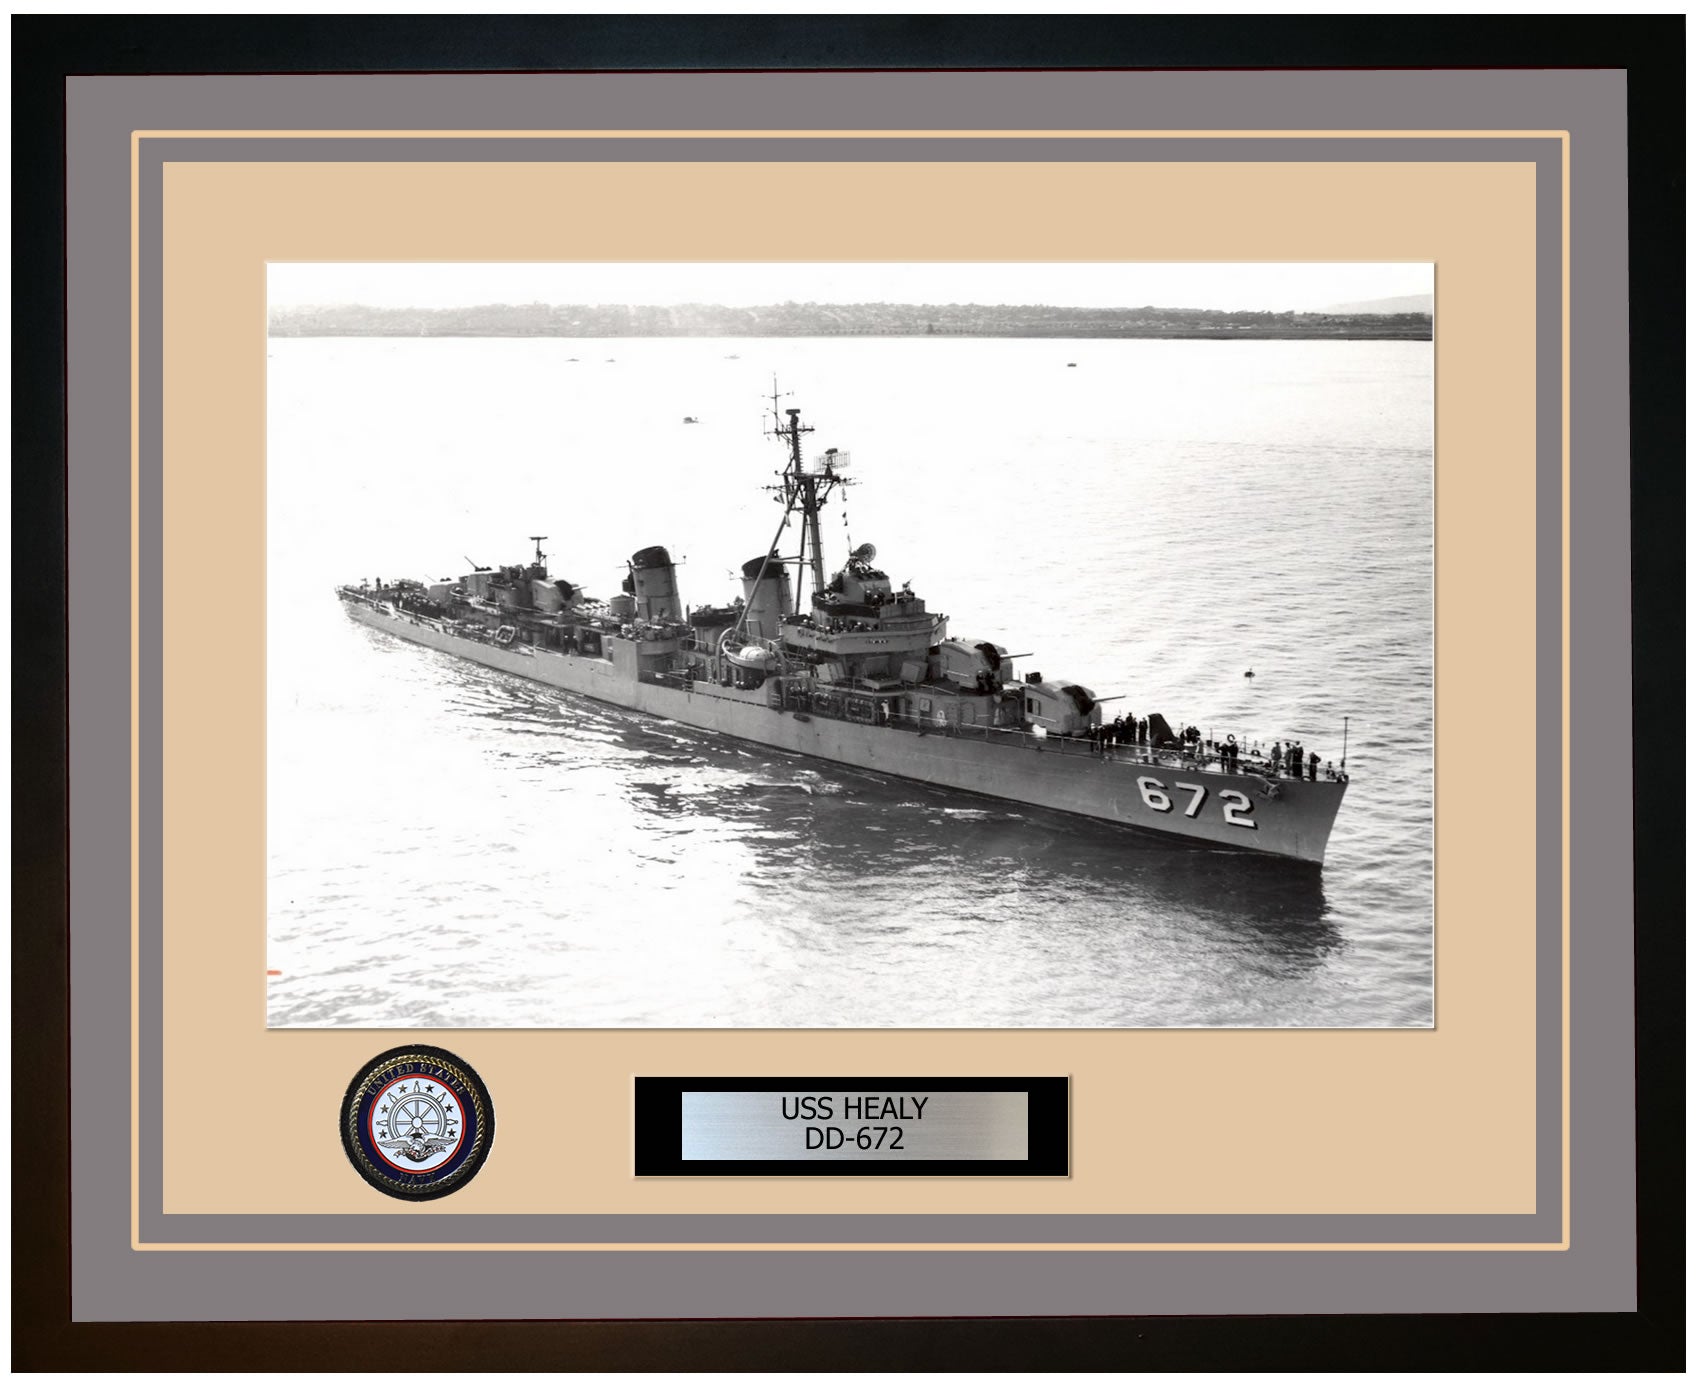 USS HEALY DD-672 Framed Navy Ship Photo Grey